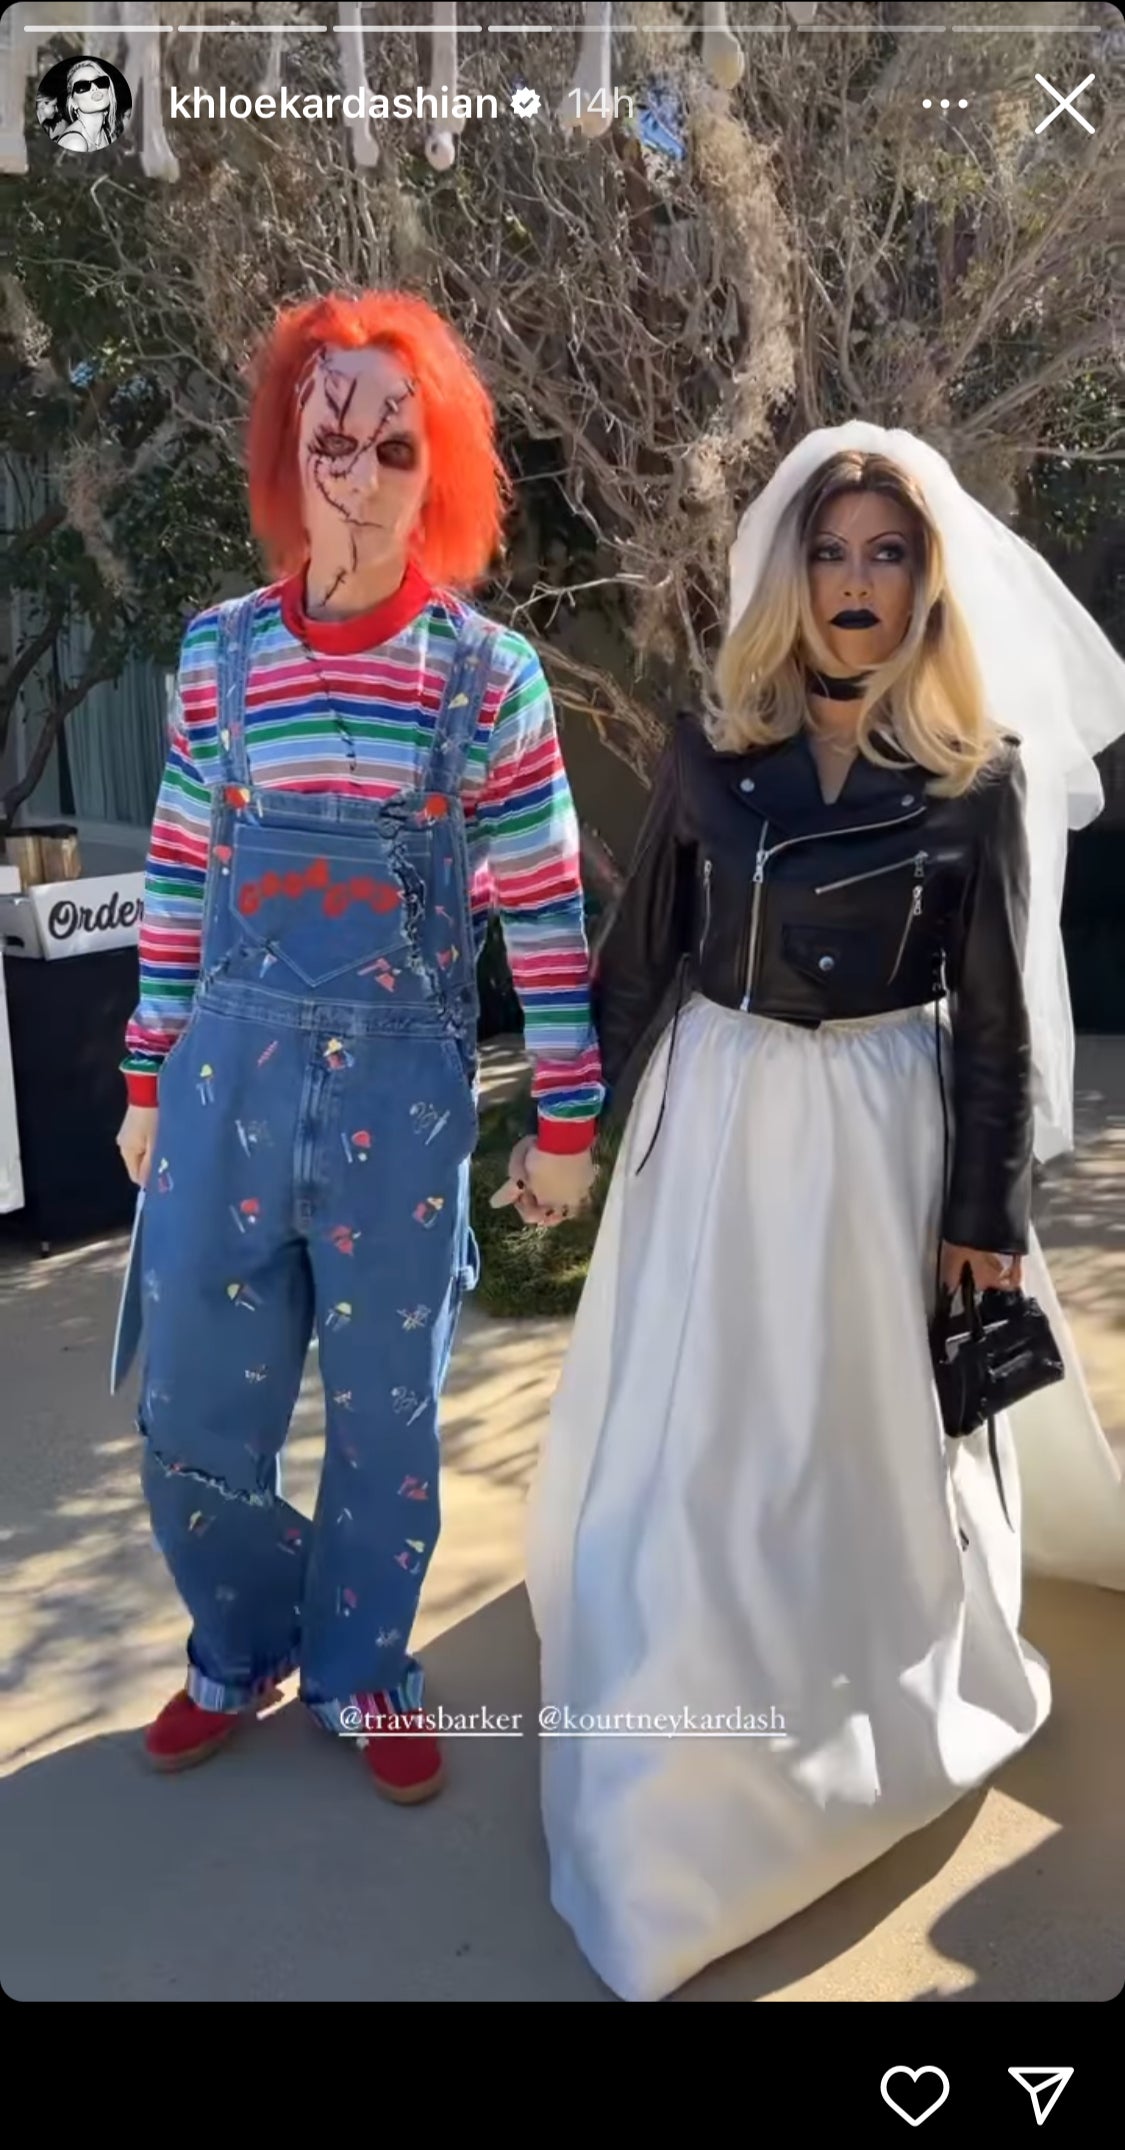 Kourtney Kardashian and Travis Barker dressed as Chucky and Tiffany Valentine from the film ‘Bride of Chucky’